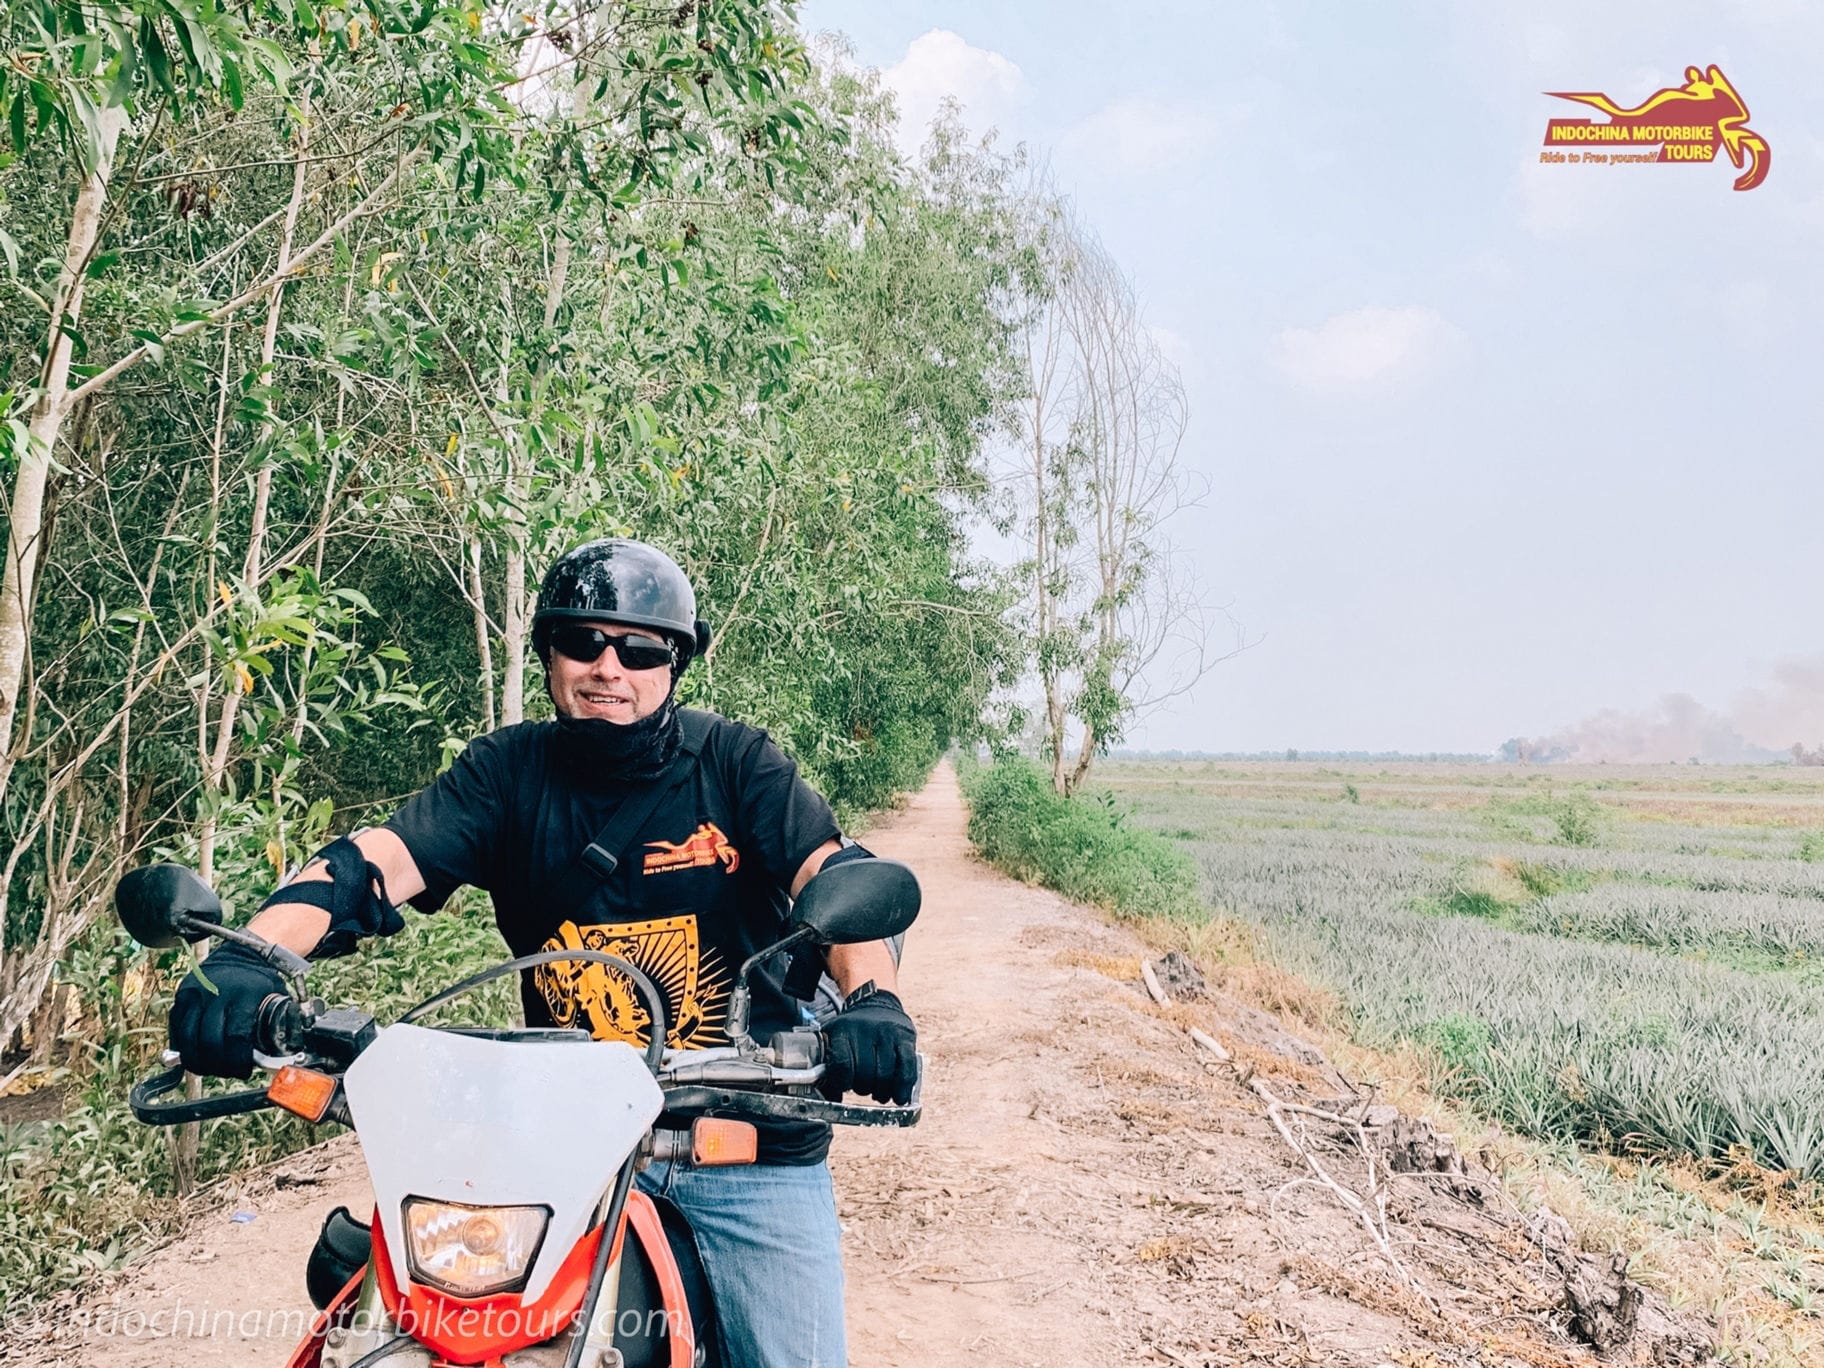 Adventure Saigon Motorbike Tour to Da Lat, Mui Ne, Bao Loc, Cat Tien